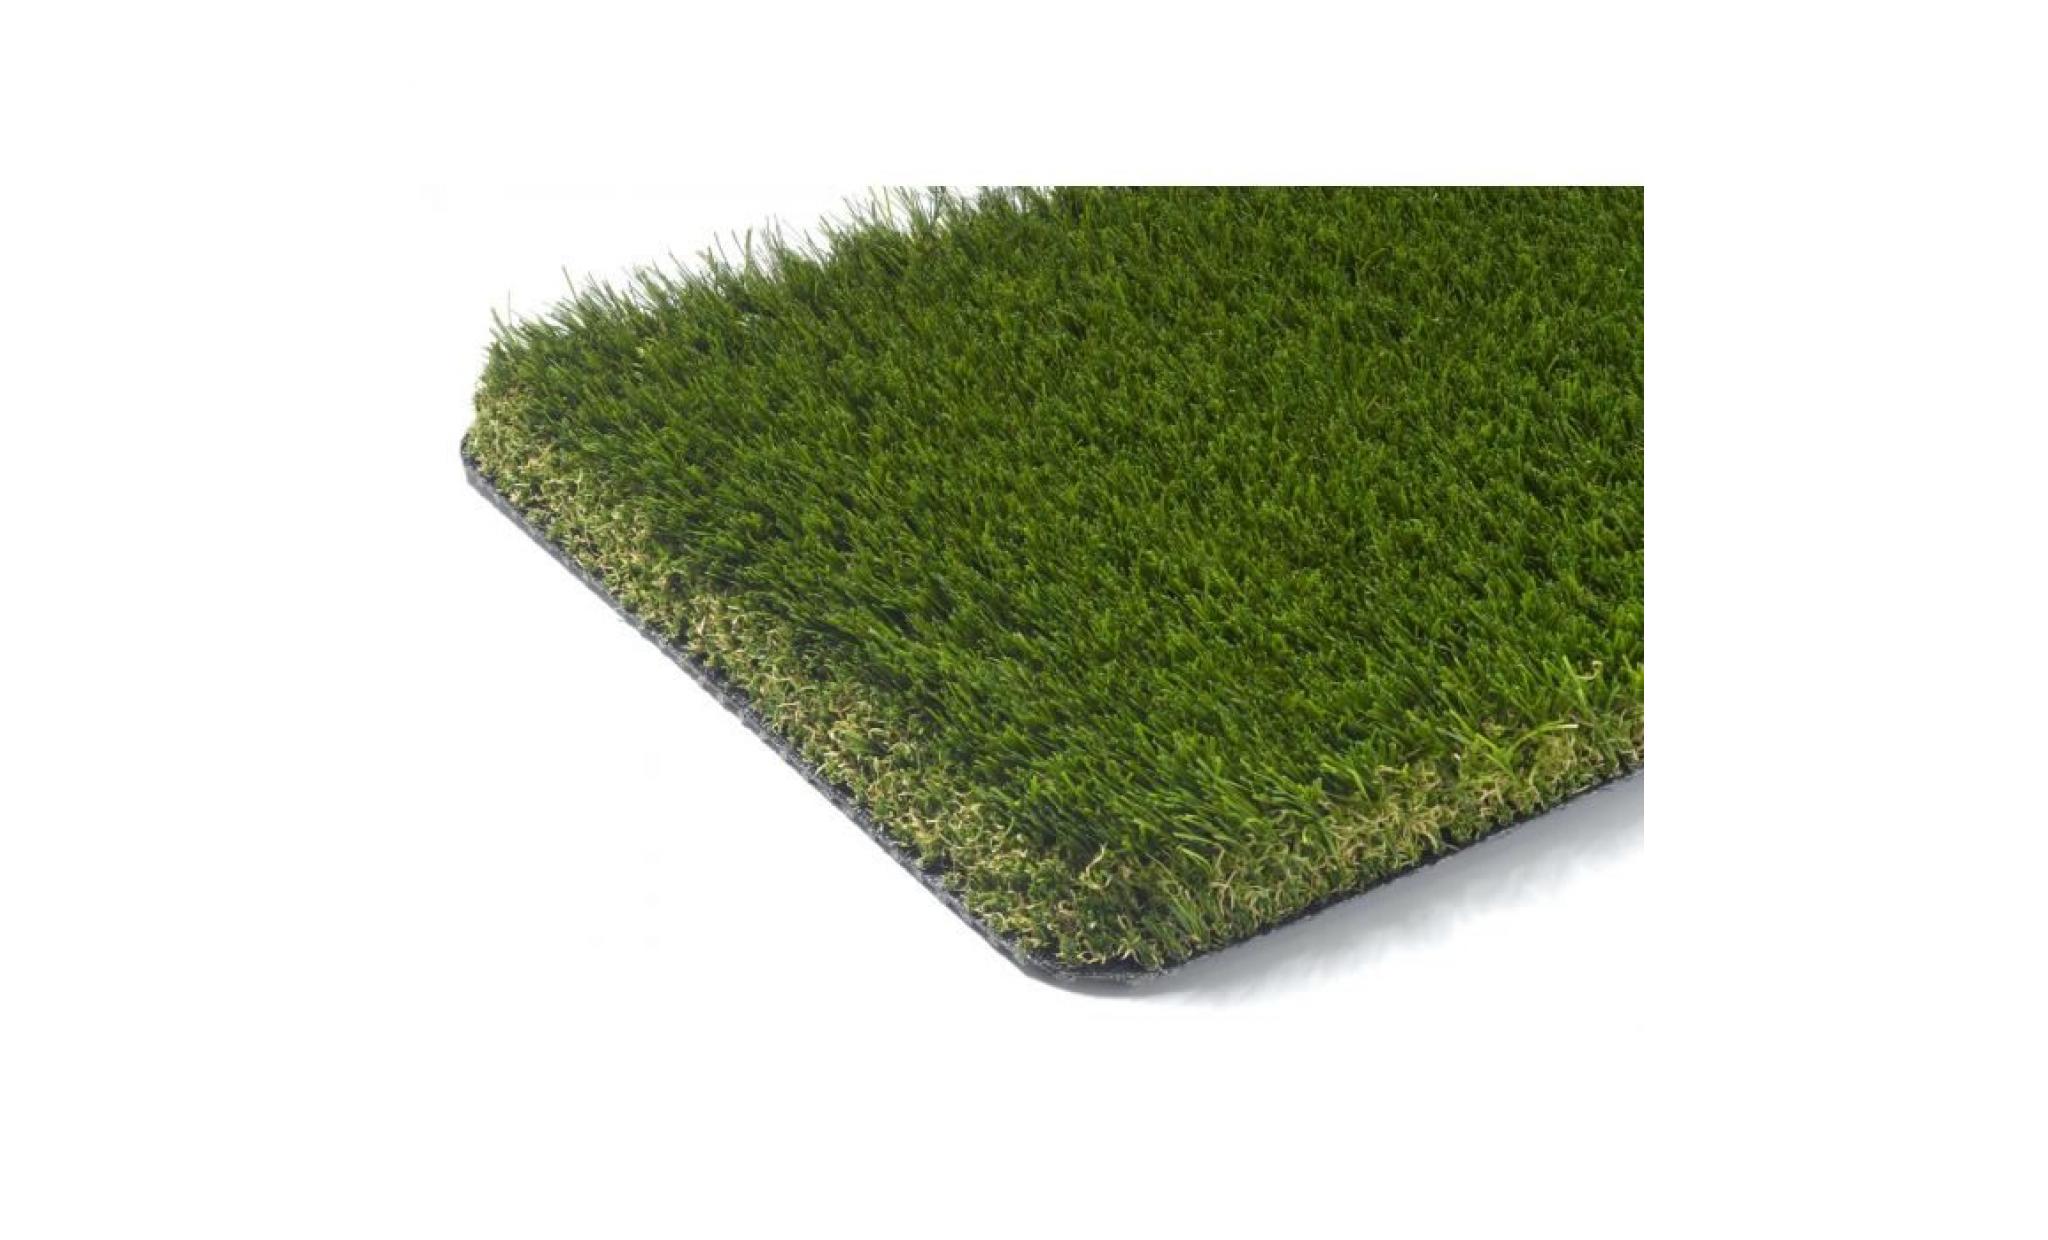 buckingham   tapis type luxe gazon artificiel – pour jardin, terrasse, balcon   vert  [200x400 cm]